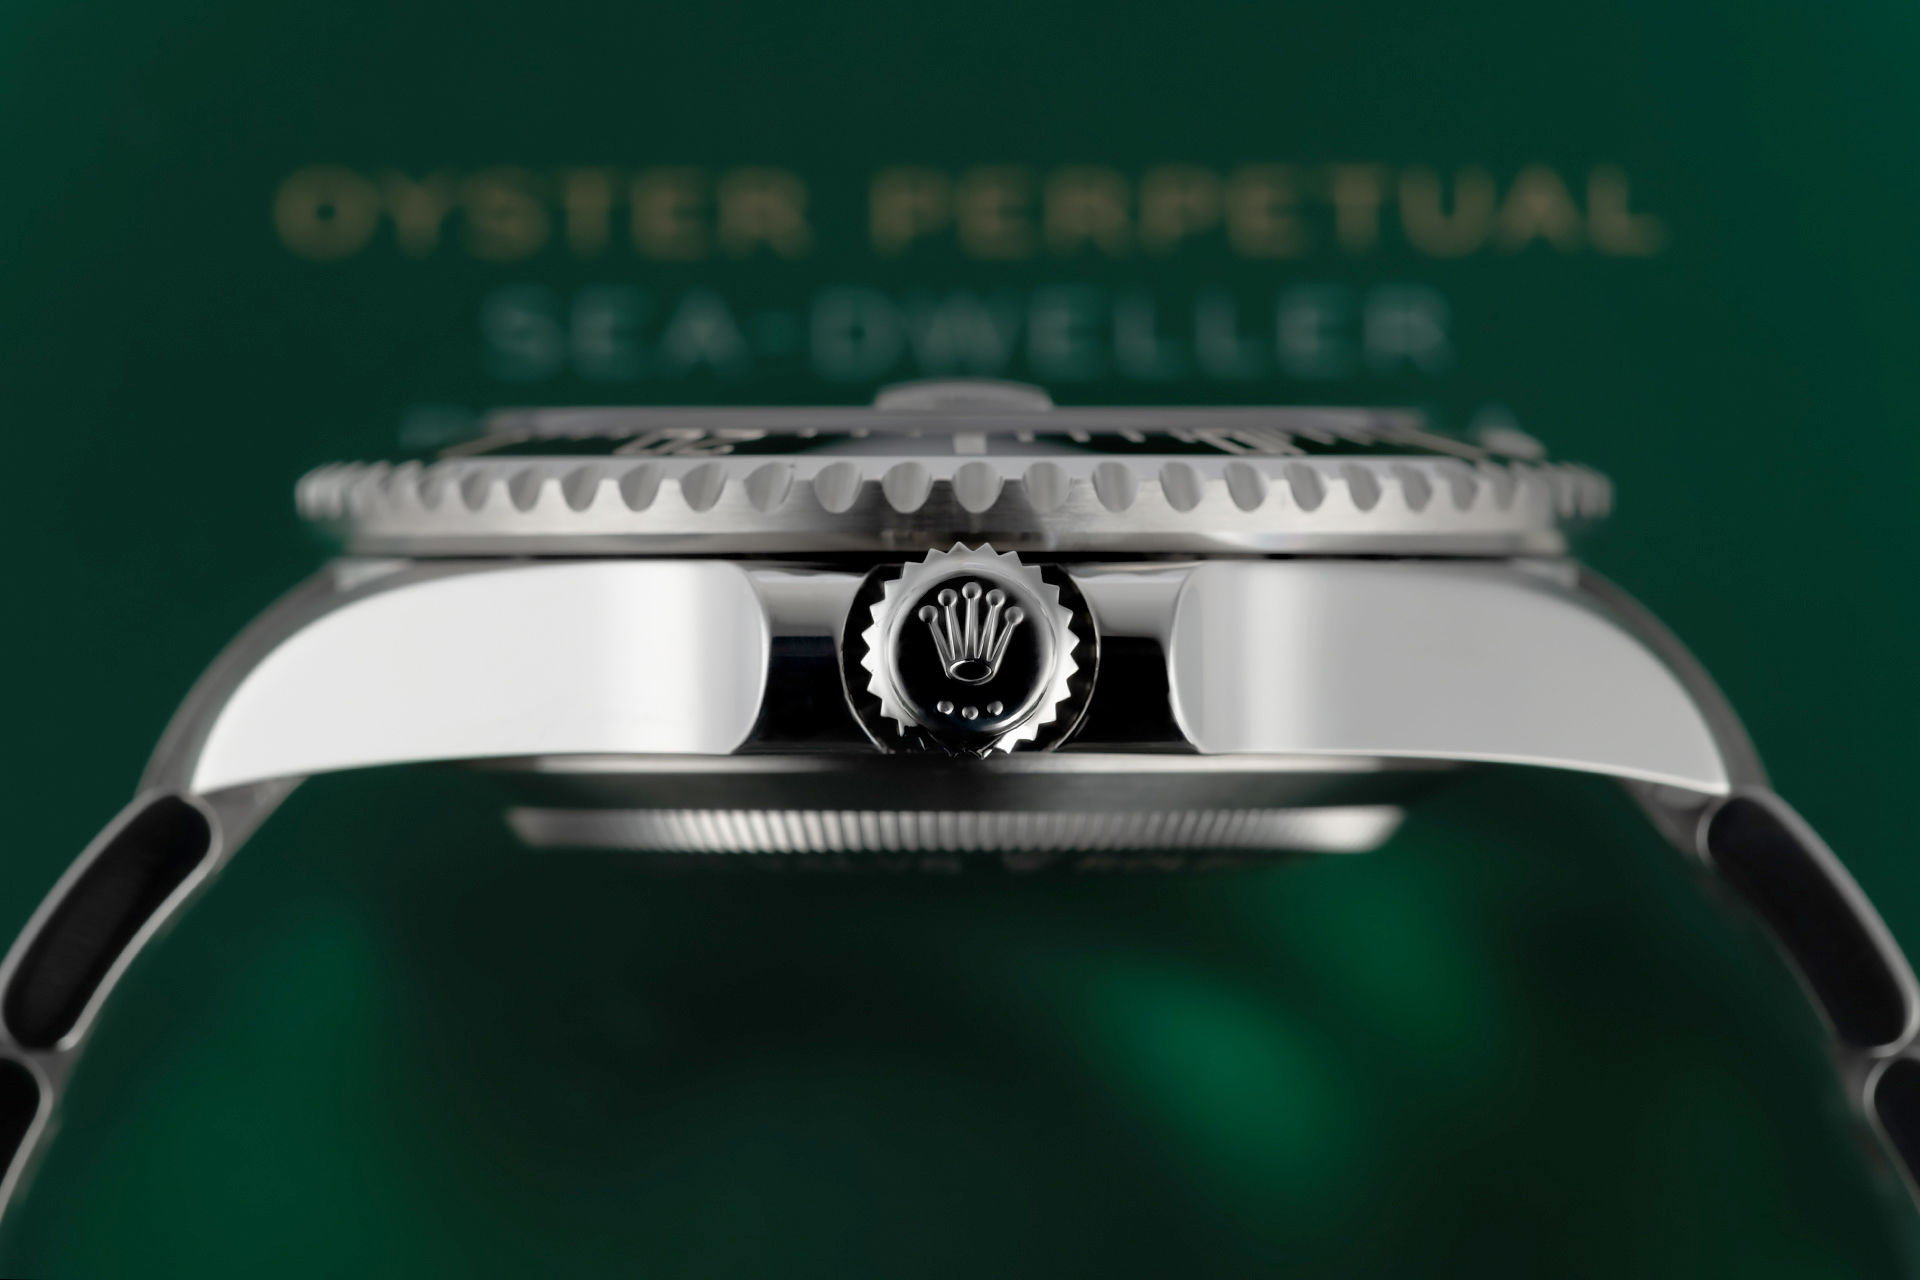 ref 126600 | Brand New 'Anniversary Model' | Rolex Sea-Dweller